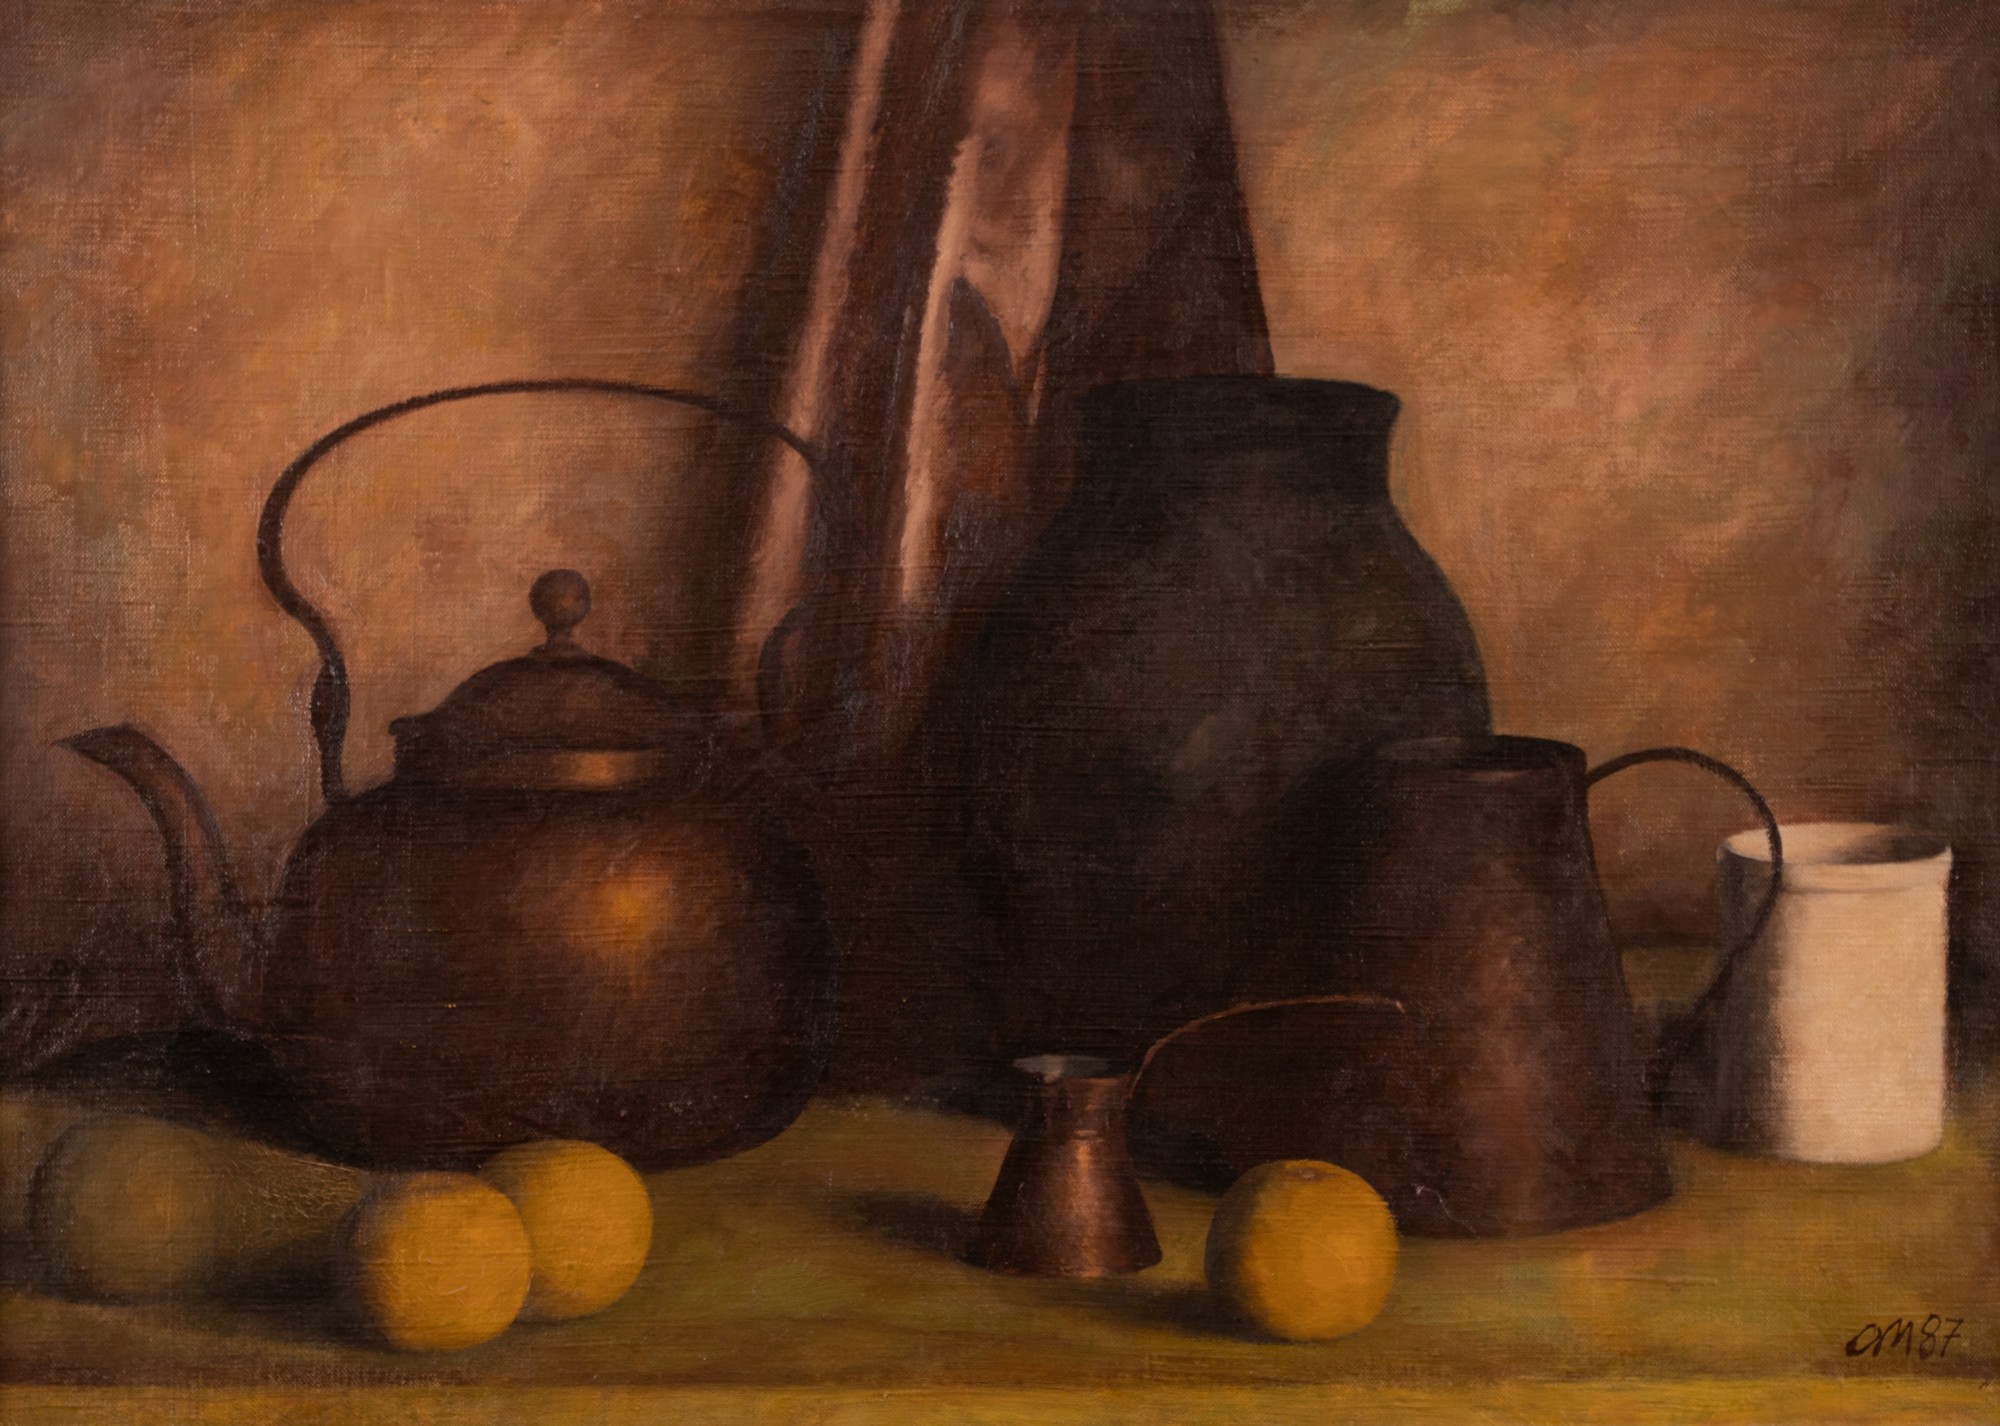 Olav Maran "Still-life With Copper Objects"